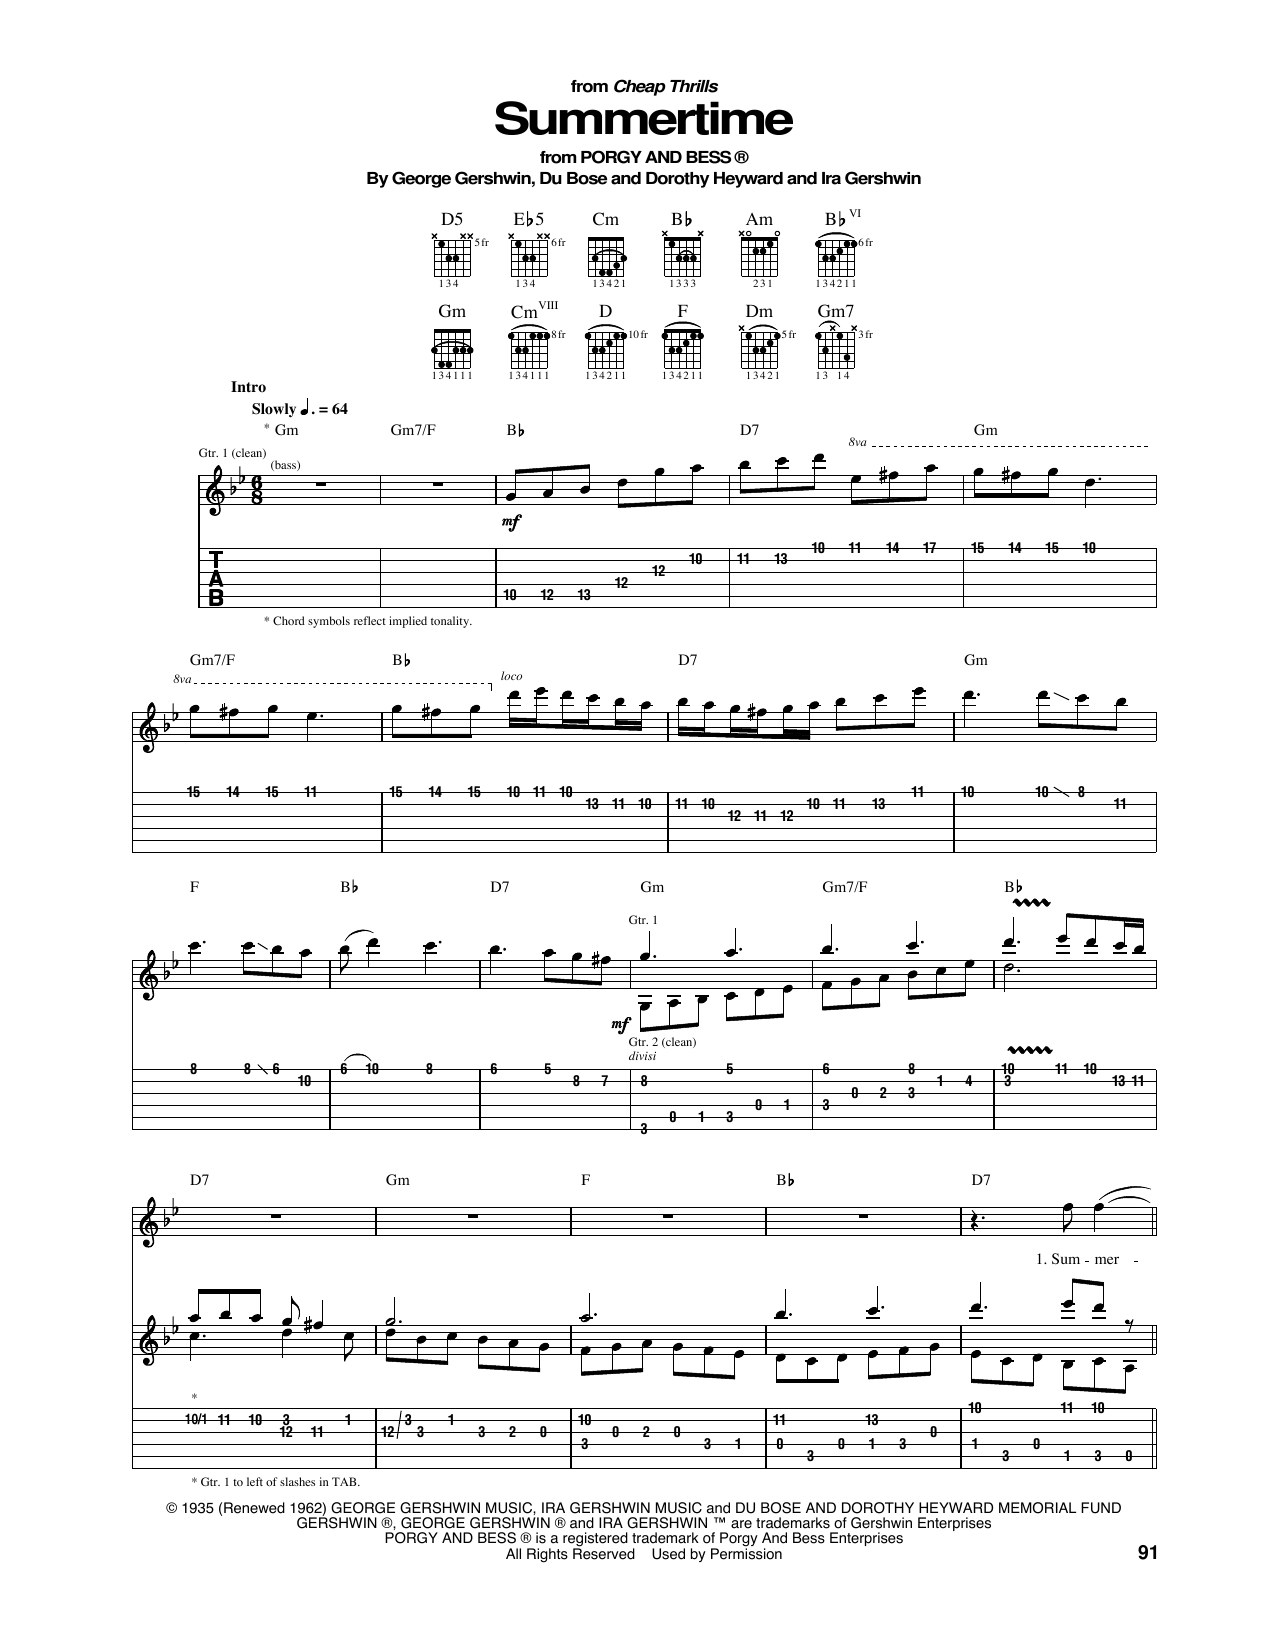 Janis Joplin Summertime Sheet Music Notes & Chords for Guitar Tab - Download or Print PDF